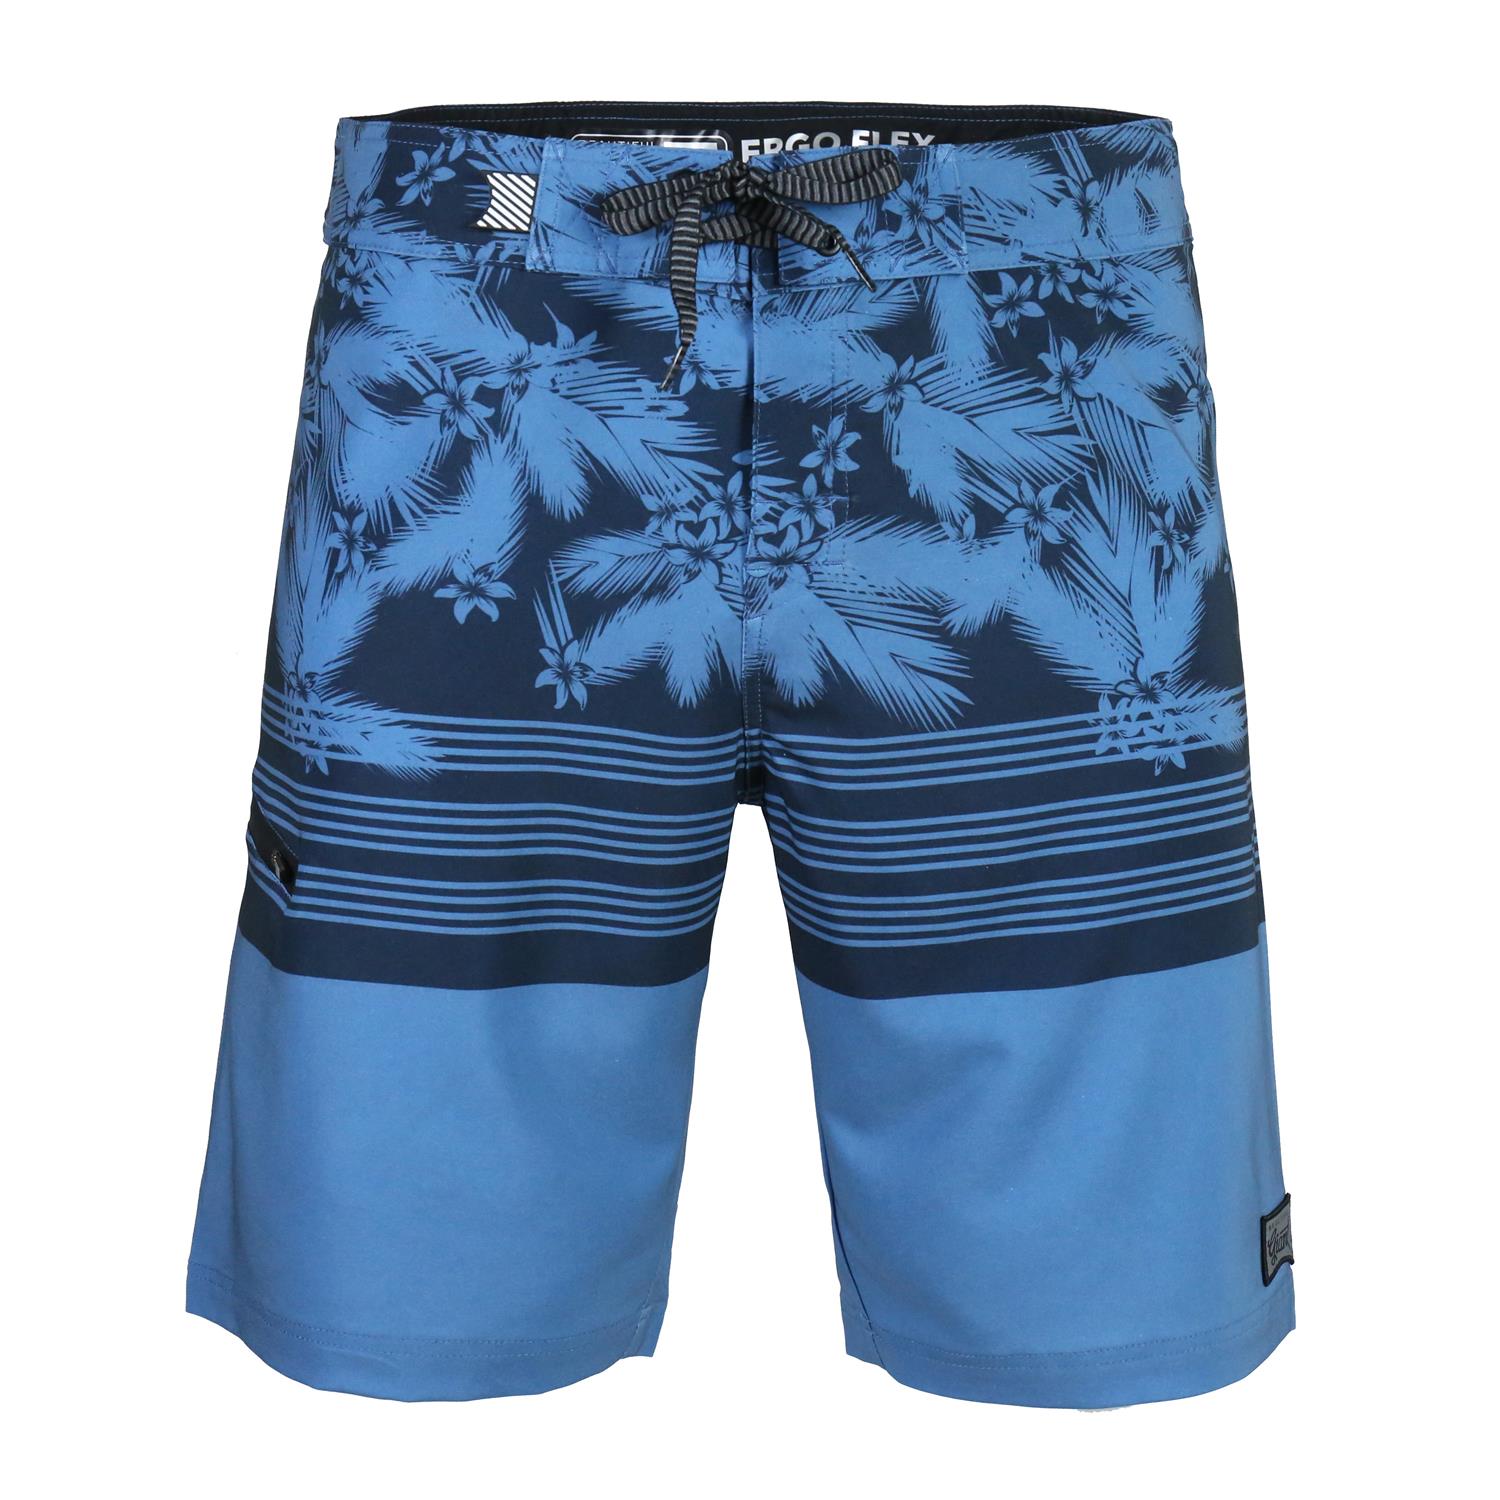 Beautiful Giant Men's Beach Vacation Swimwear Shorts (CABO)